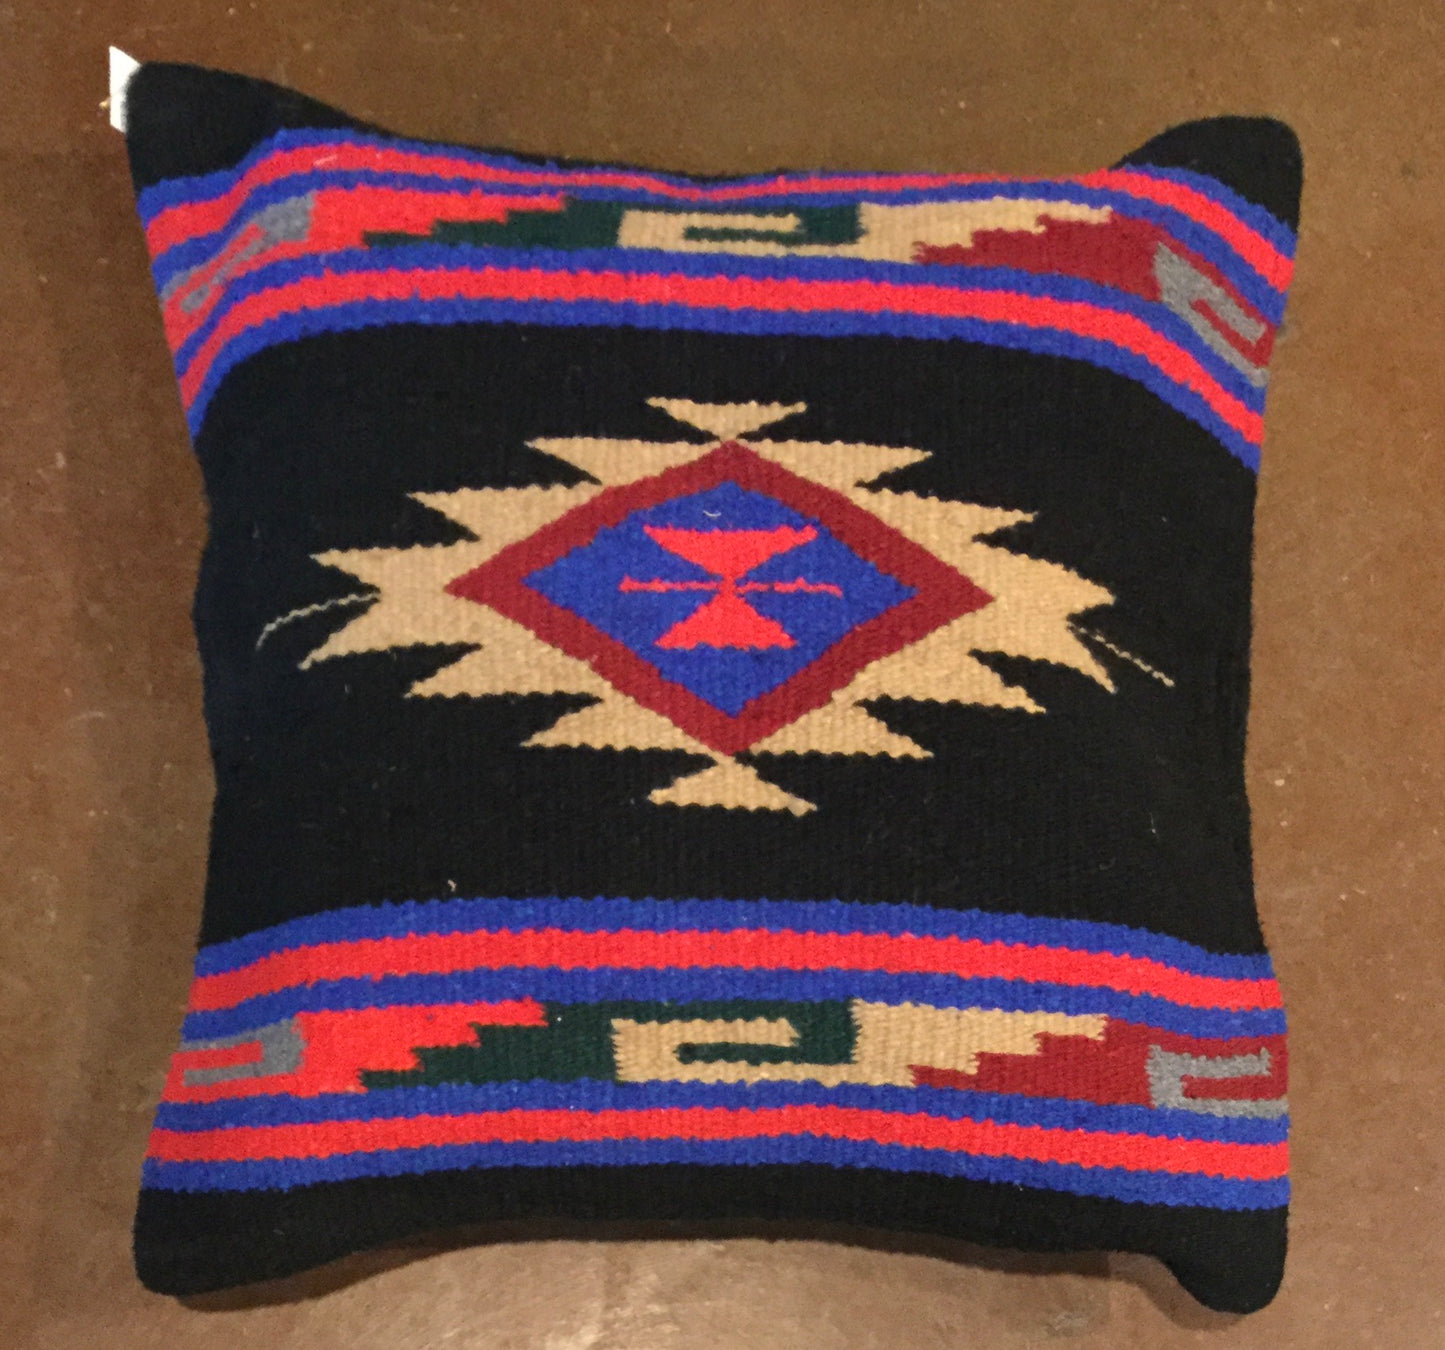 El Paso Aztec pillows shams